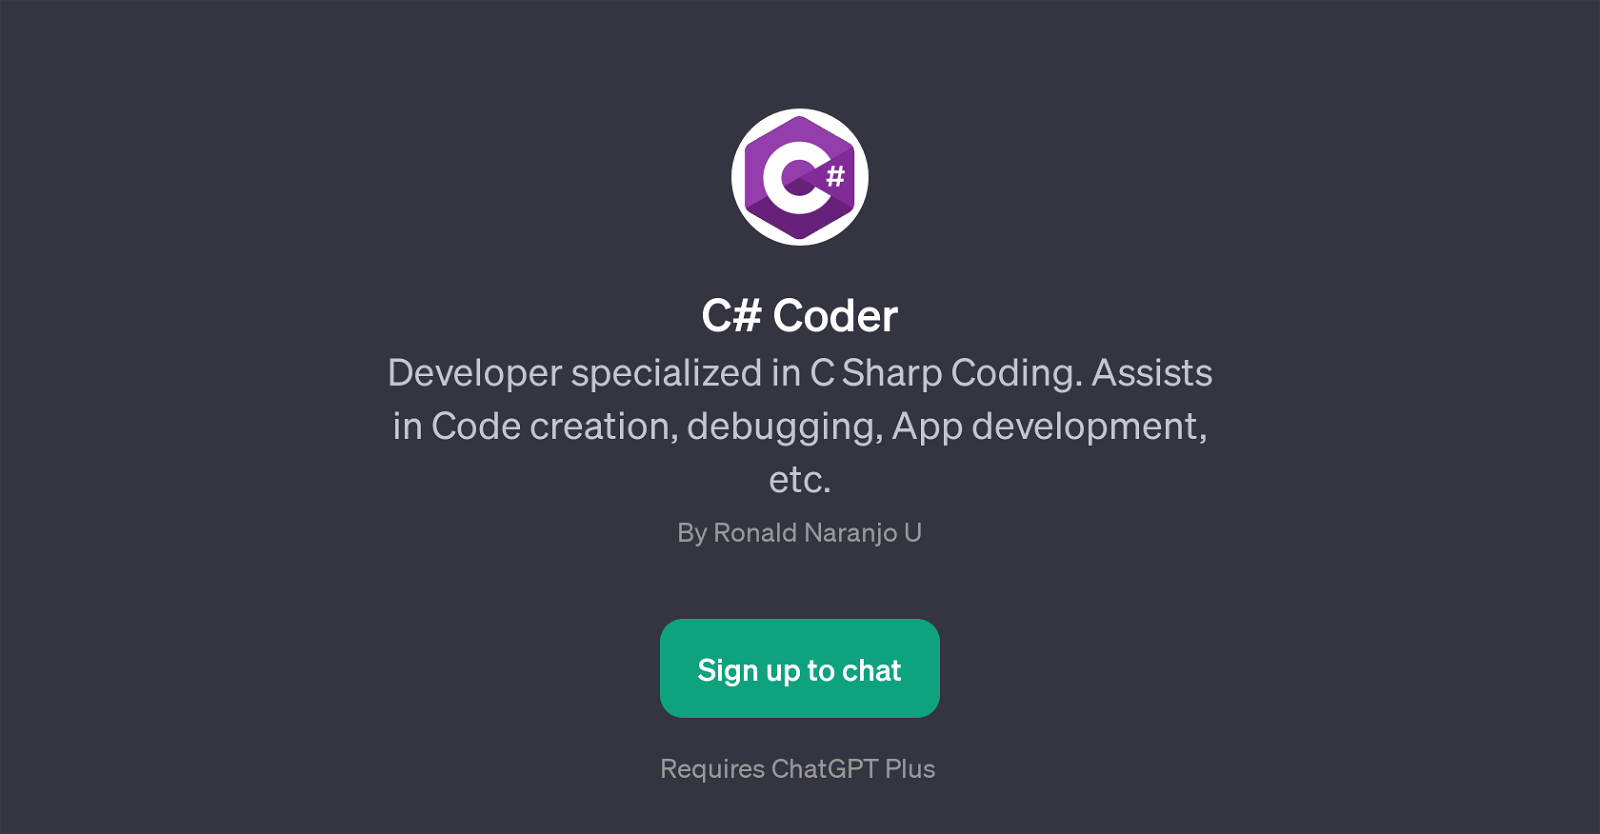 C# Coder website